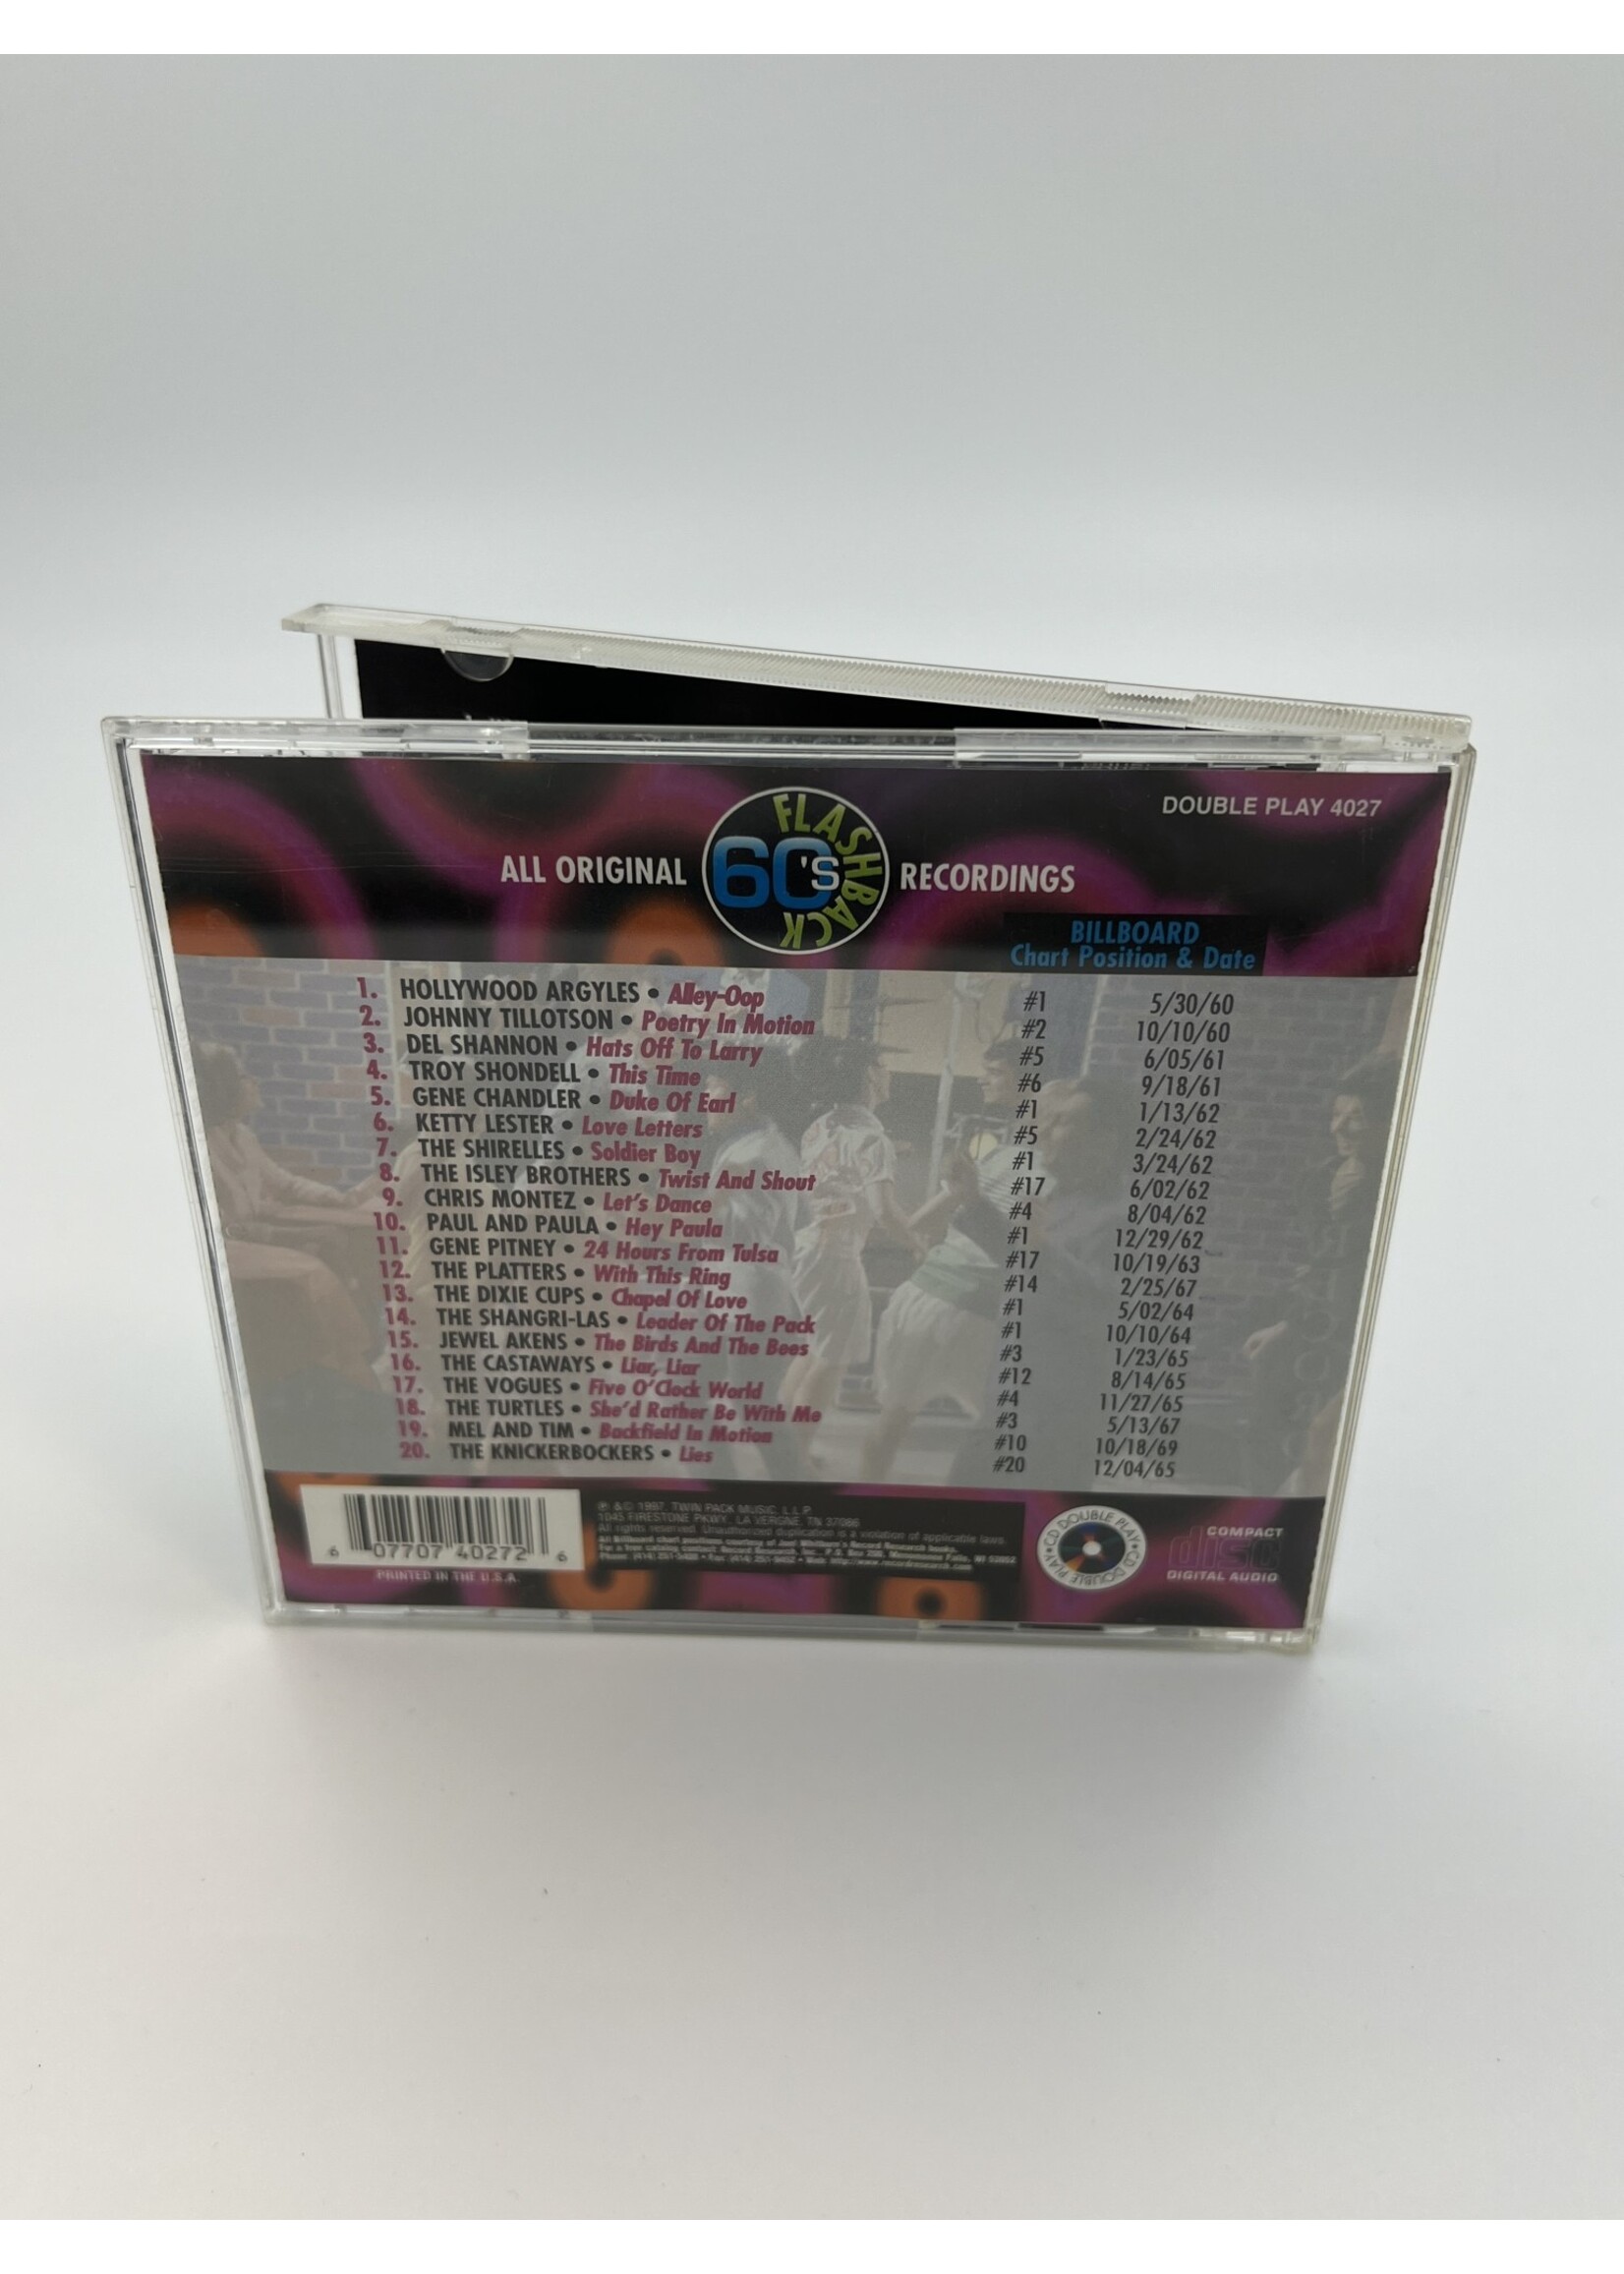 CD 60s Flashback 20 Classic Tracks Double Play CD